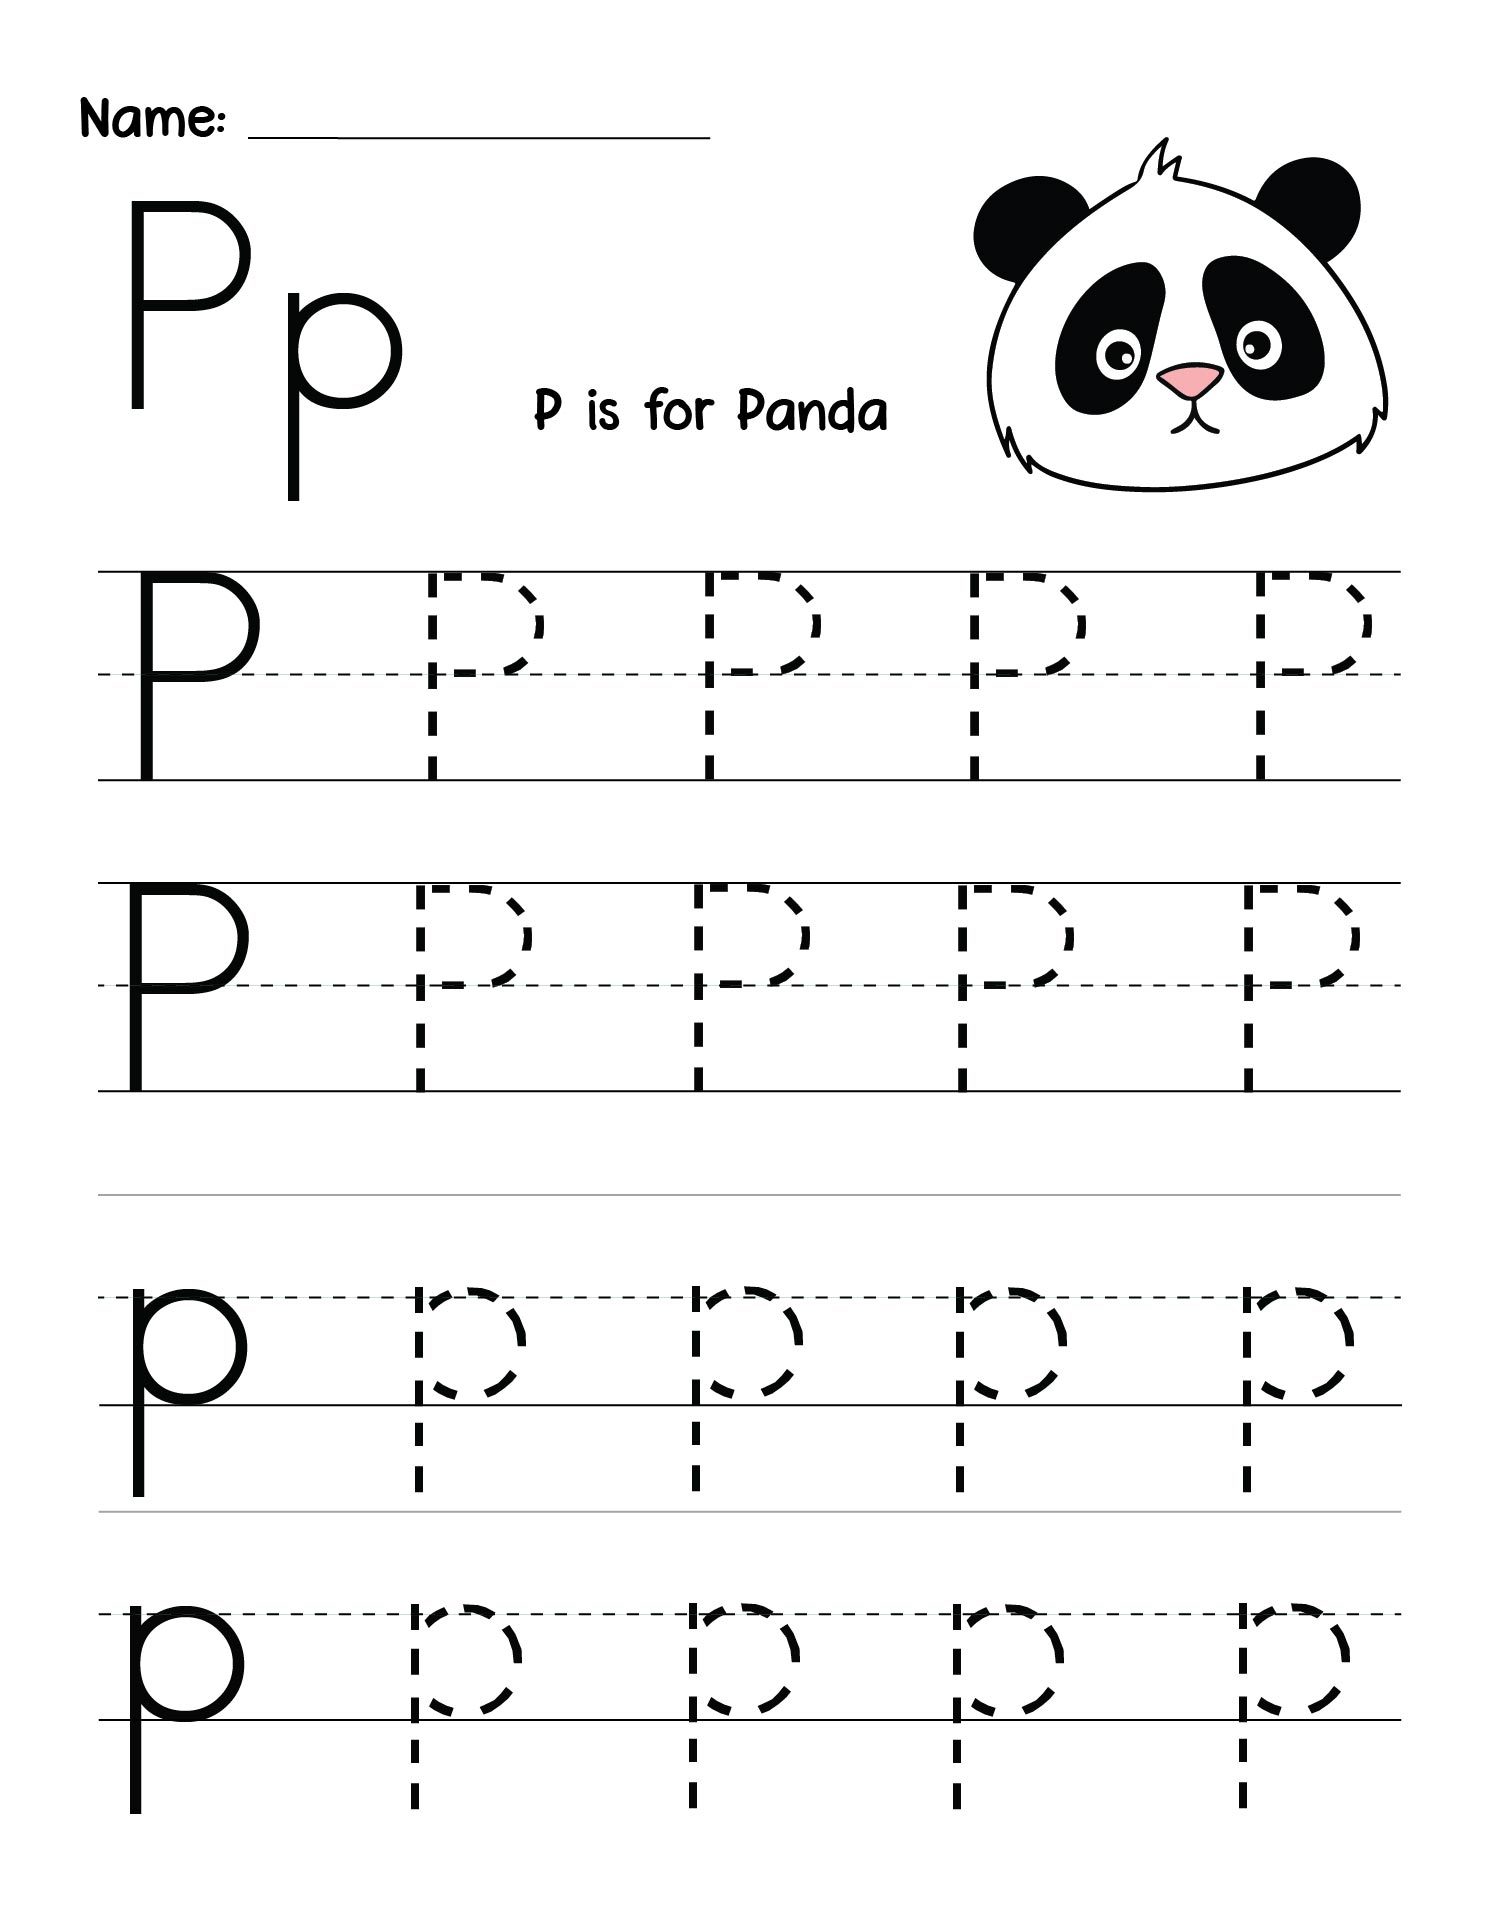 7 Best Images of Preschool Writing Worksheets Free Printable Letters - Free Printable Alphabet